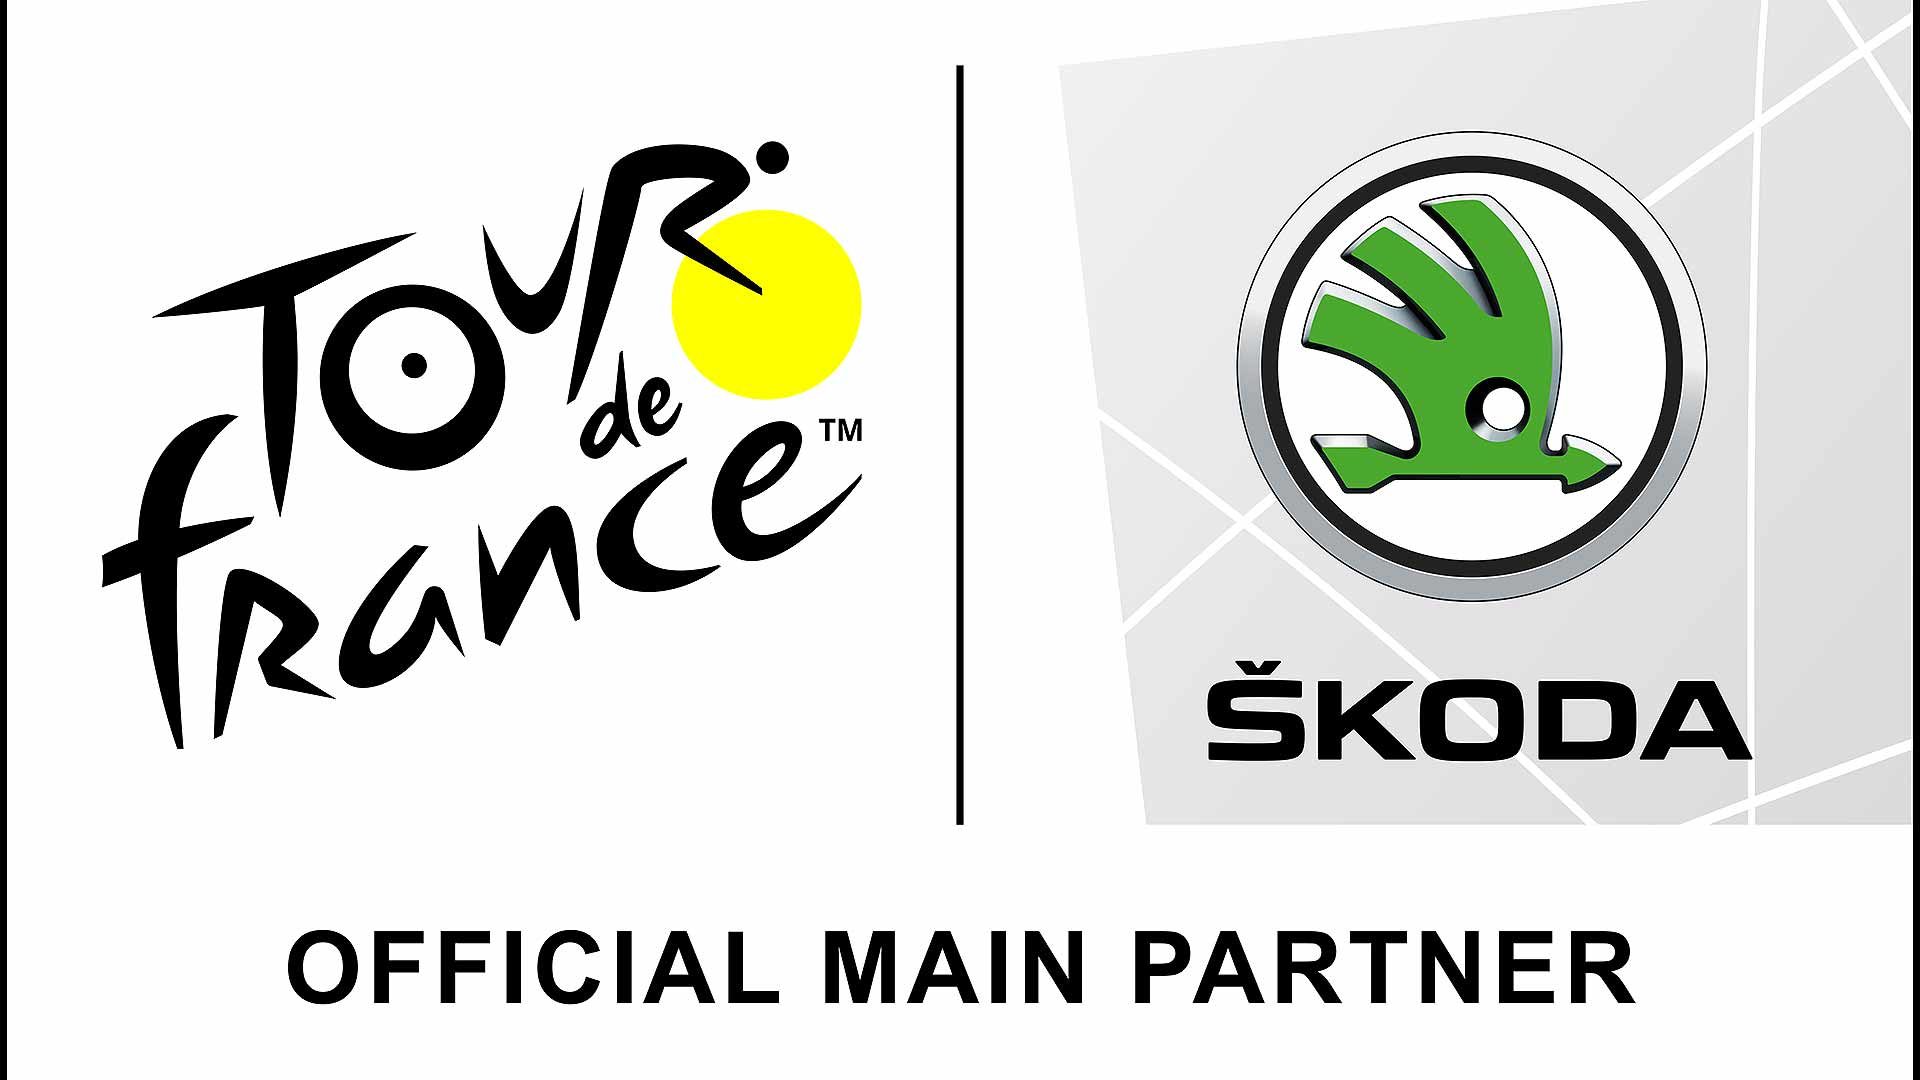 Skoda Enyaq Iv Tour De France Lead Vehicle Wallpapers